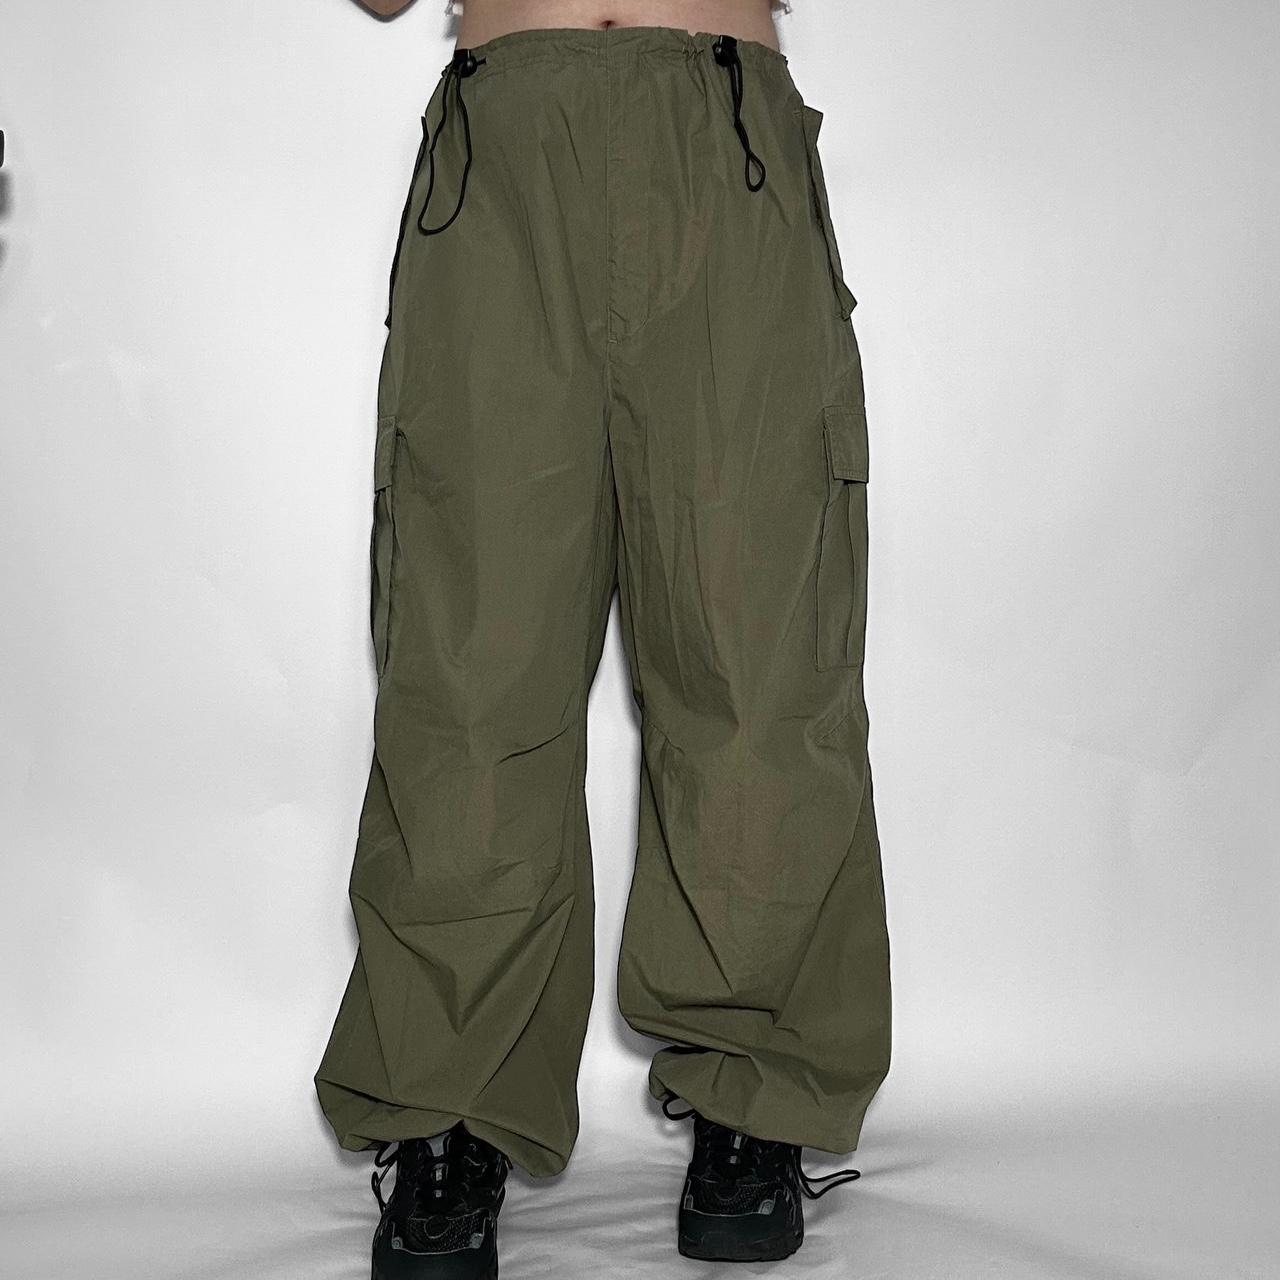 Vintage 90s khaki adjustable unisex parachute pants